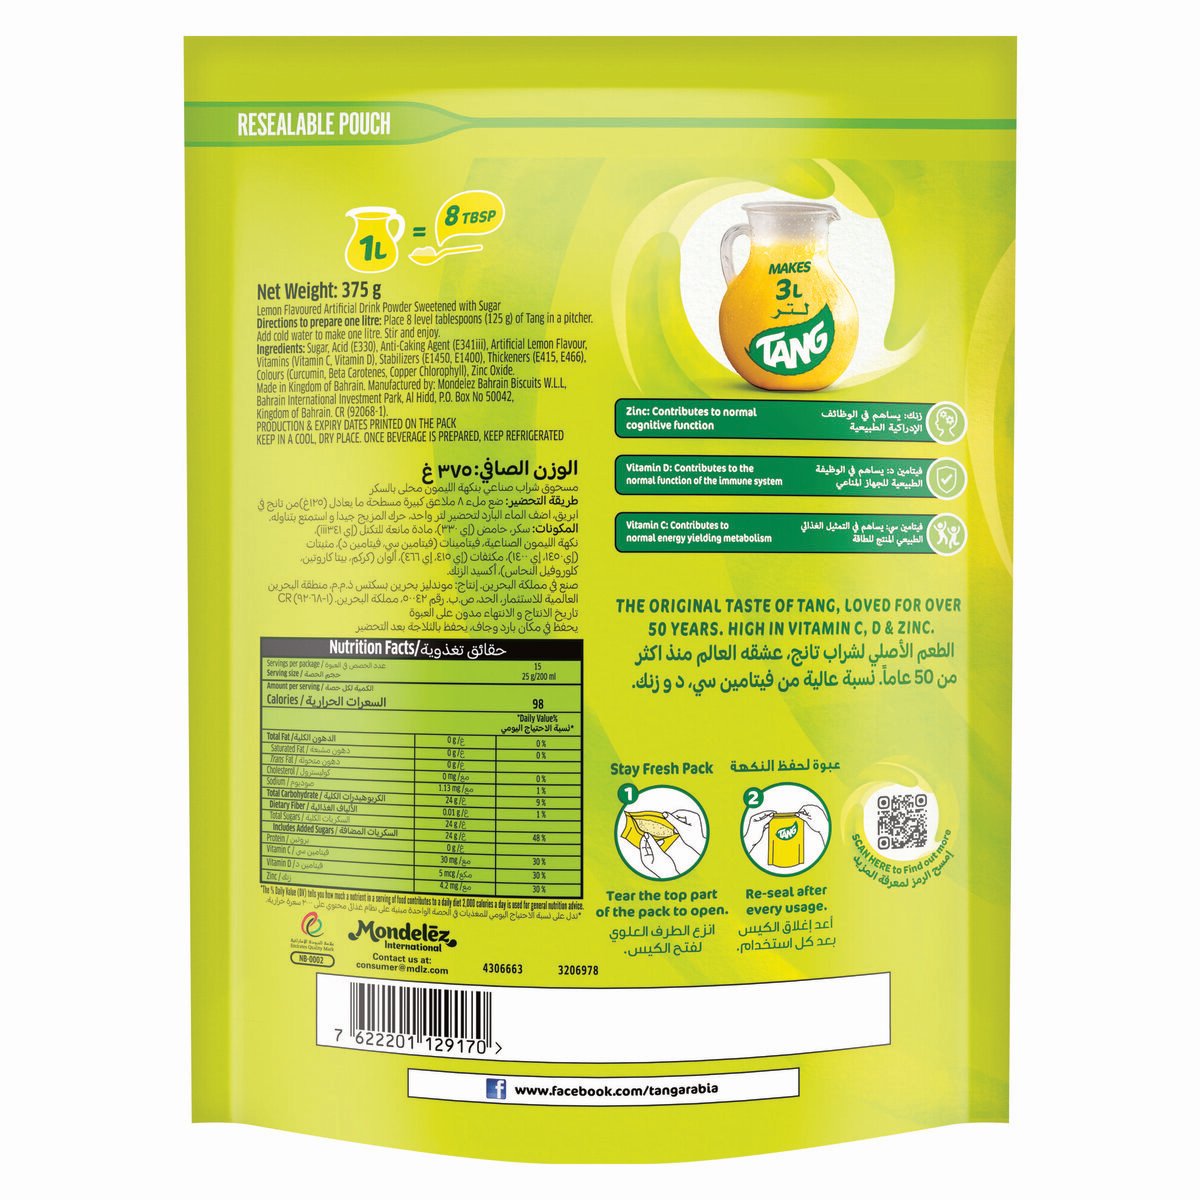 Tang Lemon Instant Powdered Drink 375 g